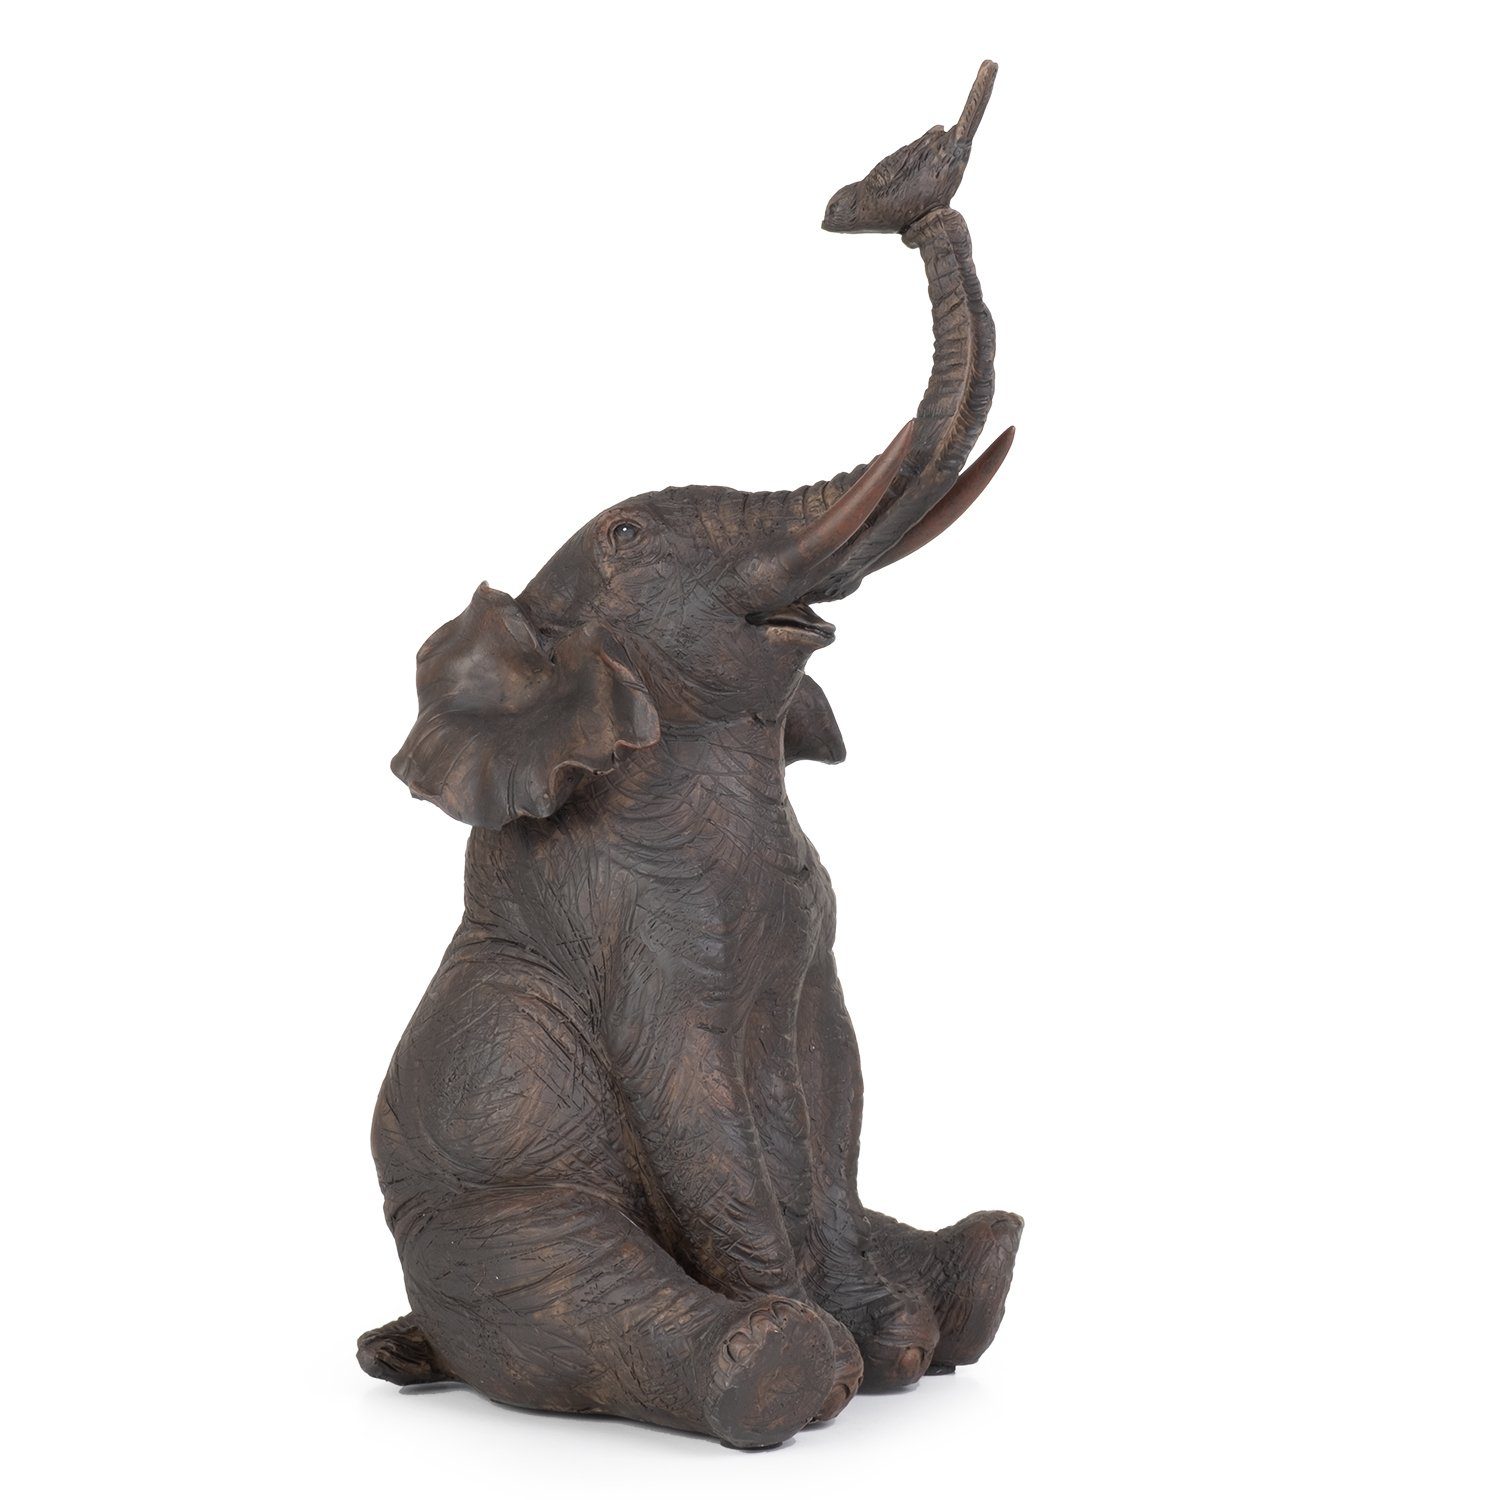 Moritz Dekofigur Deko-Figur Vogel auf Elefantenrüssel verspielt aus Polyresin dunkelbra, Dekofigur aus Polyresin Dekoelement Dekoration Figuren